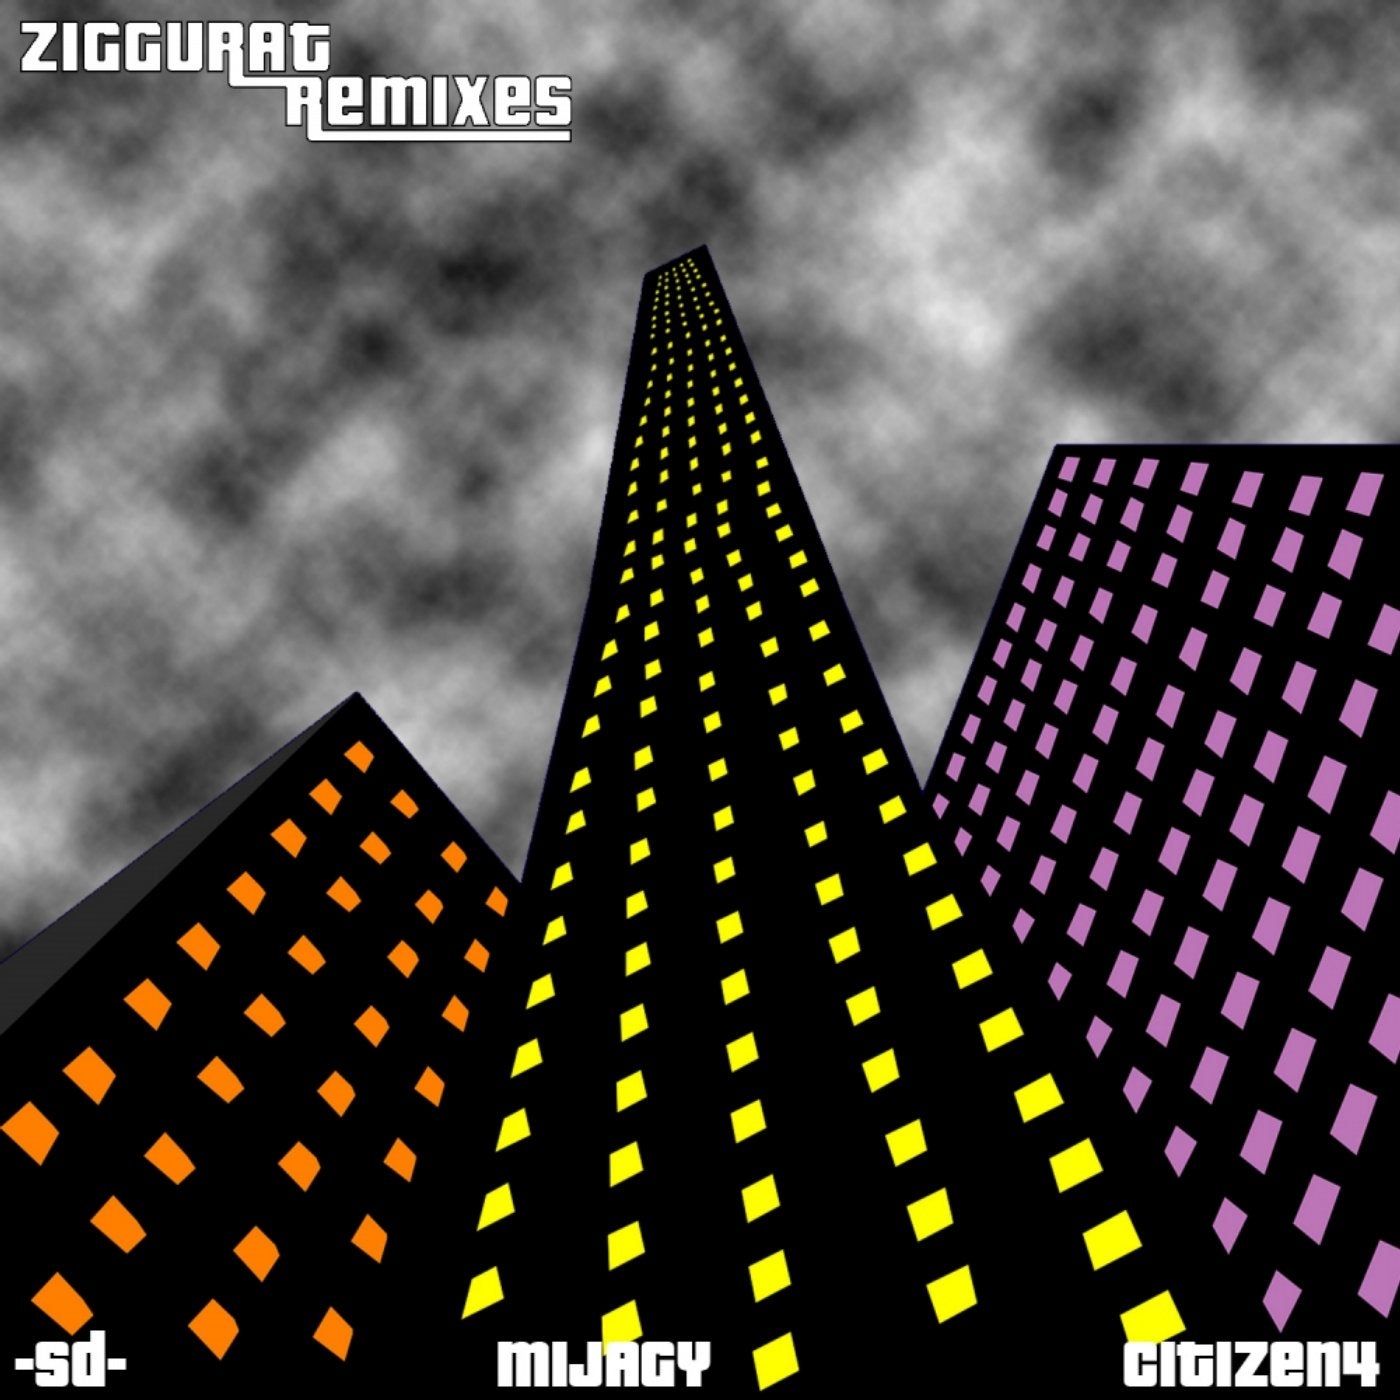 Ziggurat Remixes